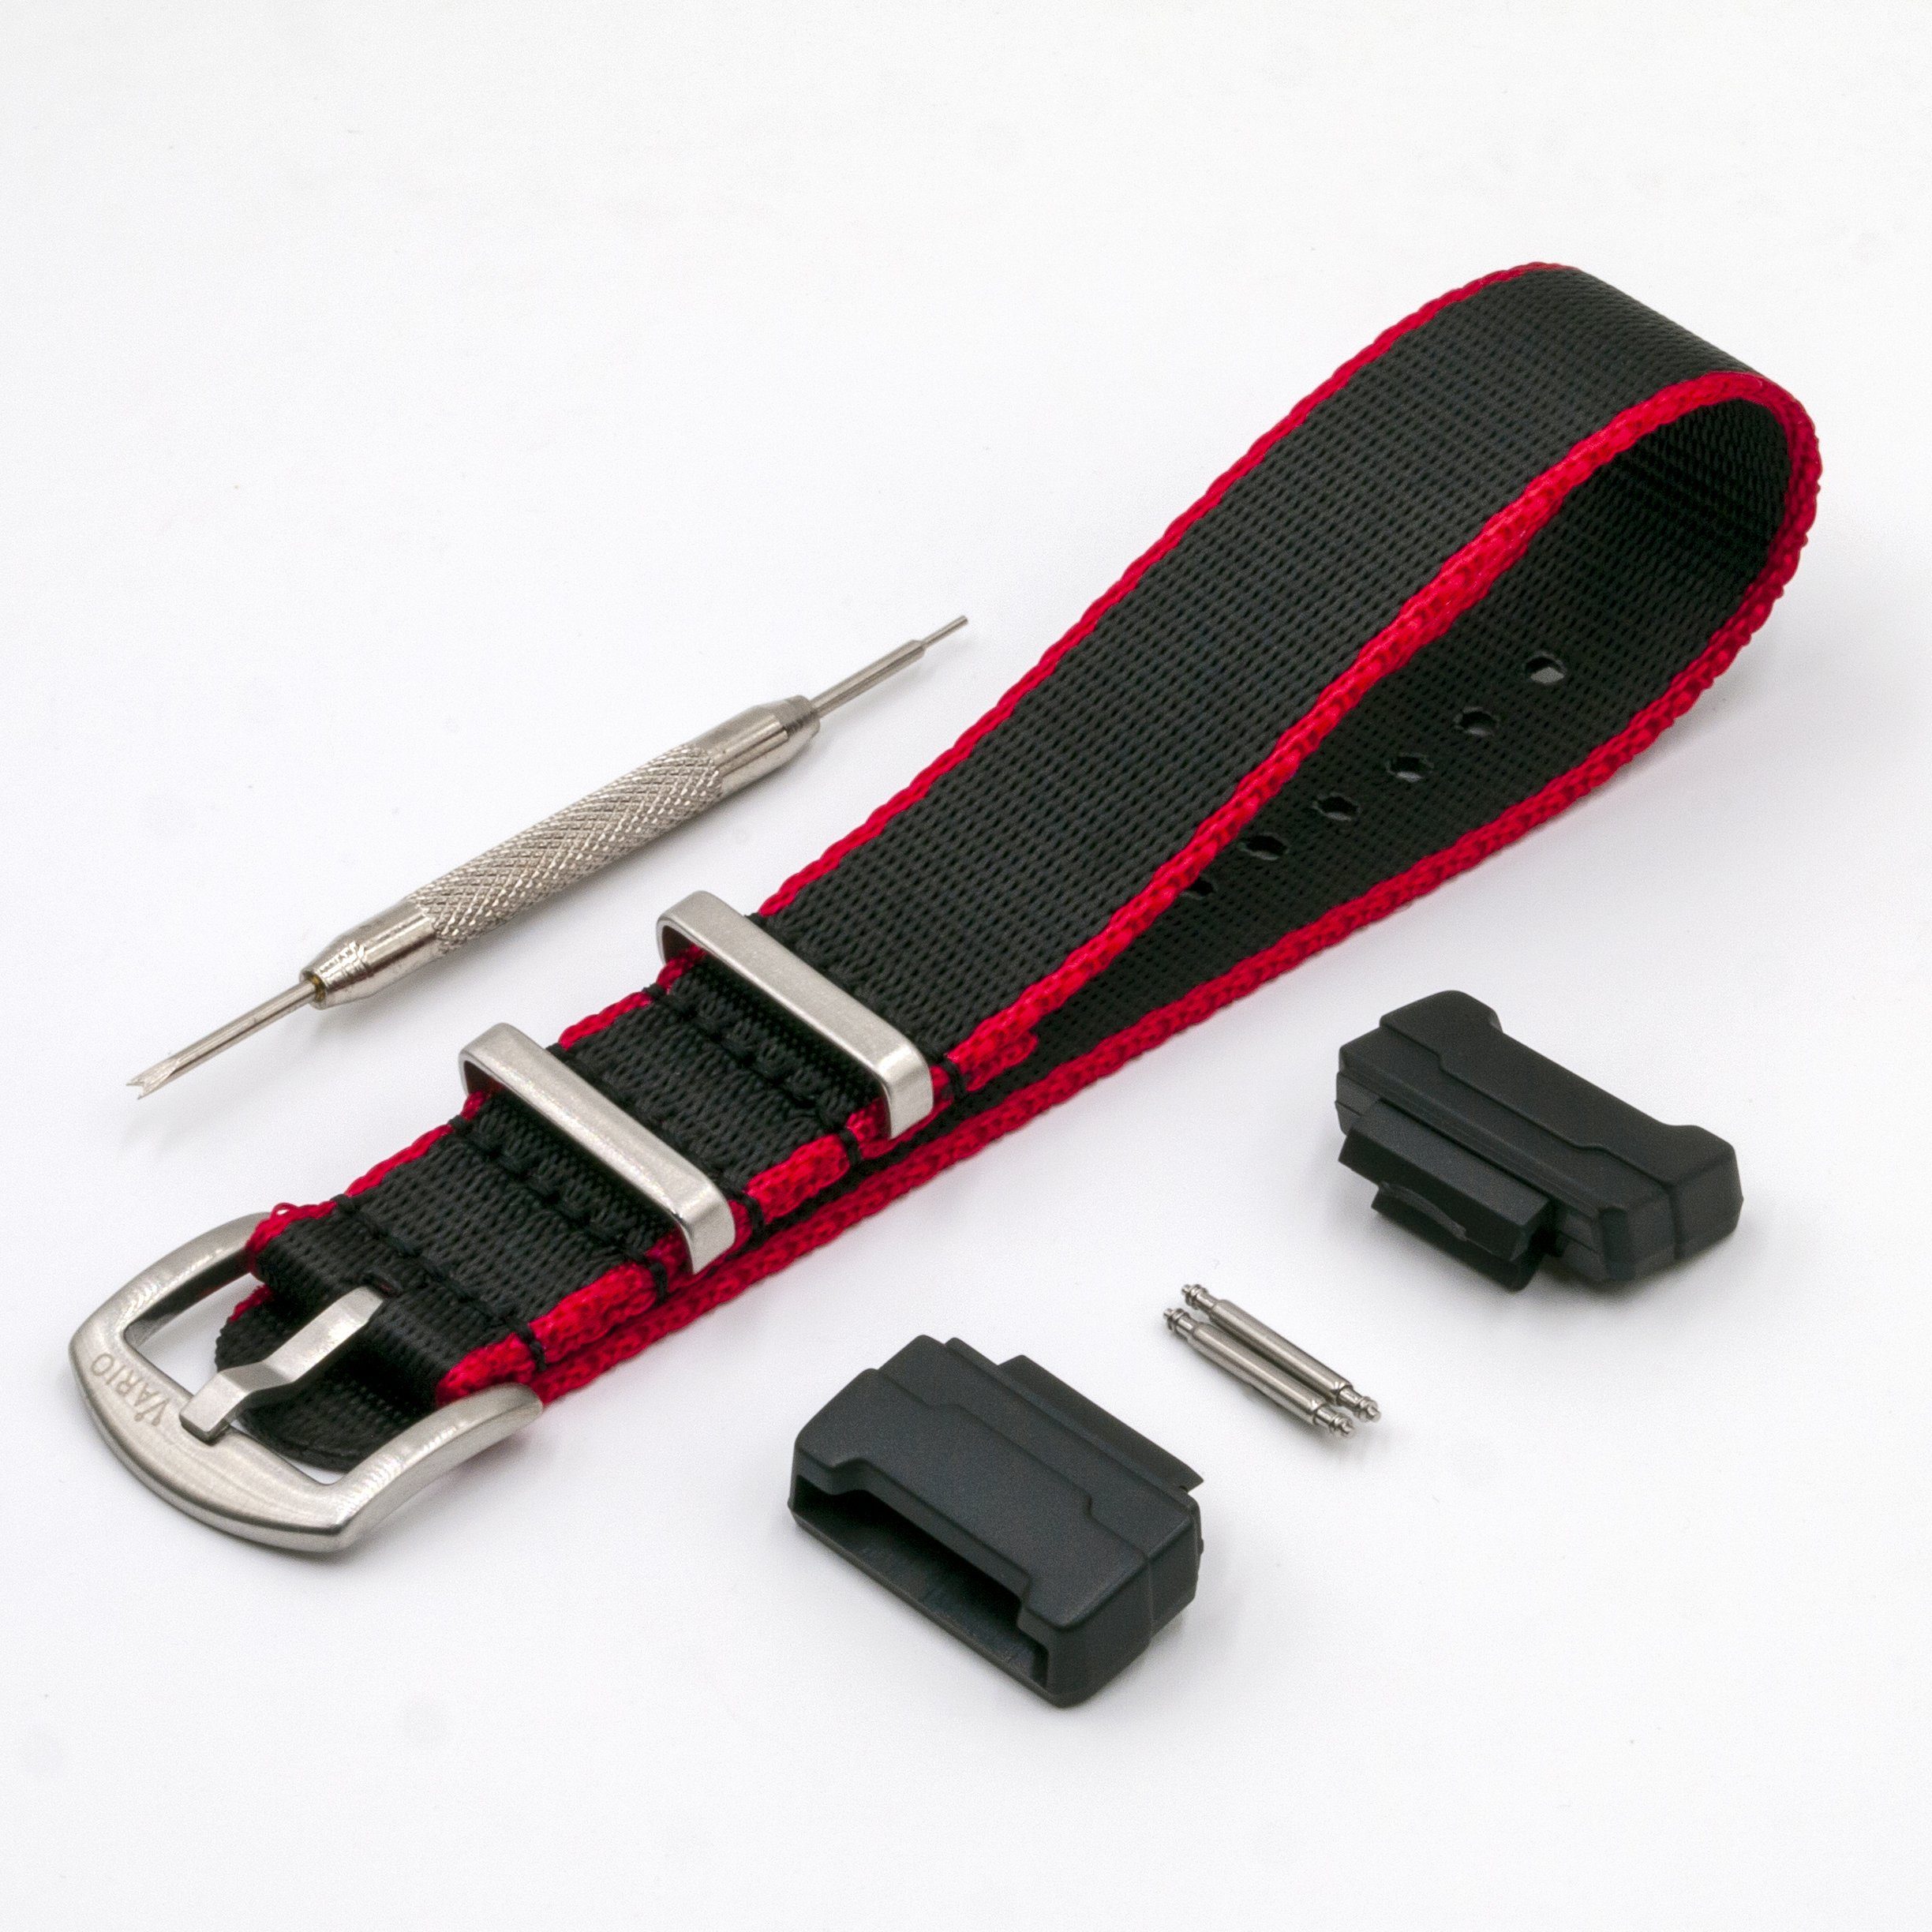 vario gshock seat belt adapter kit red and black stripe